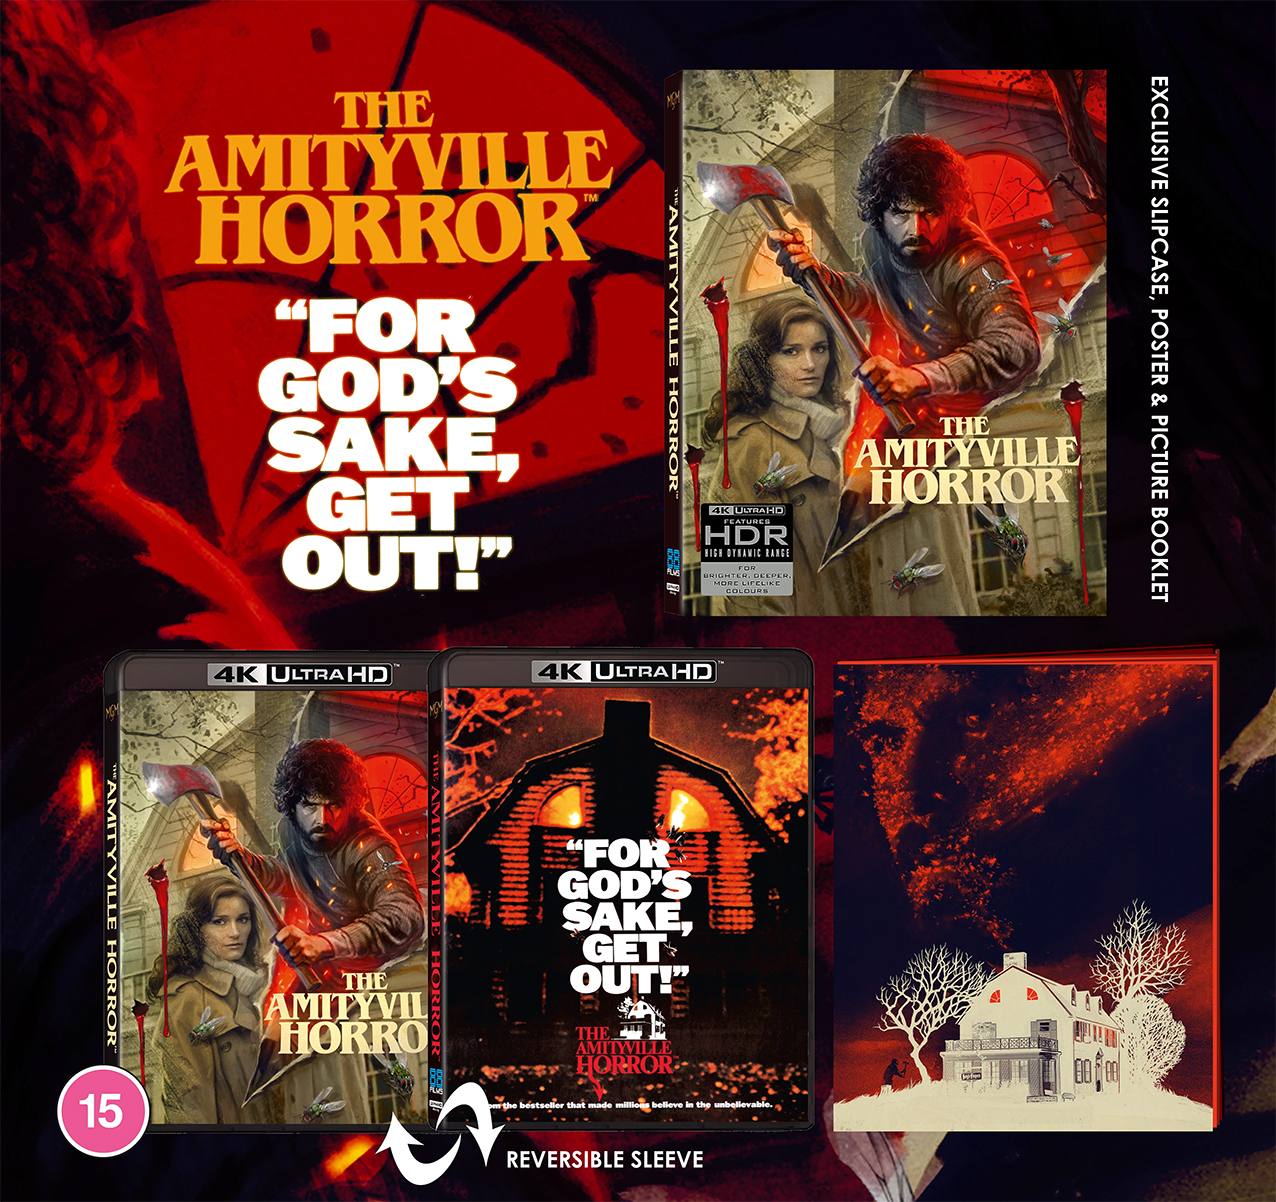 The Amityville Horror UHD & Blu-ray pack shot